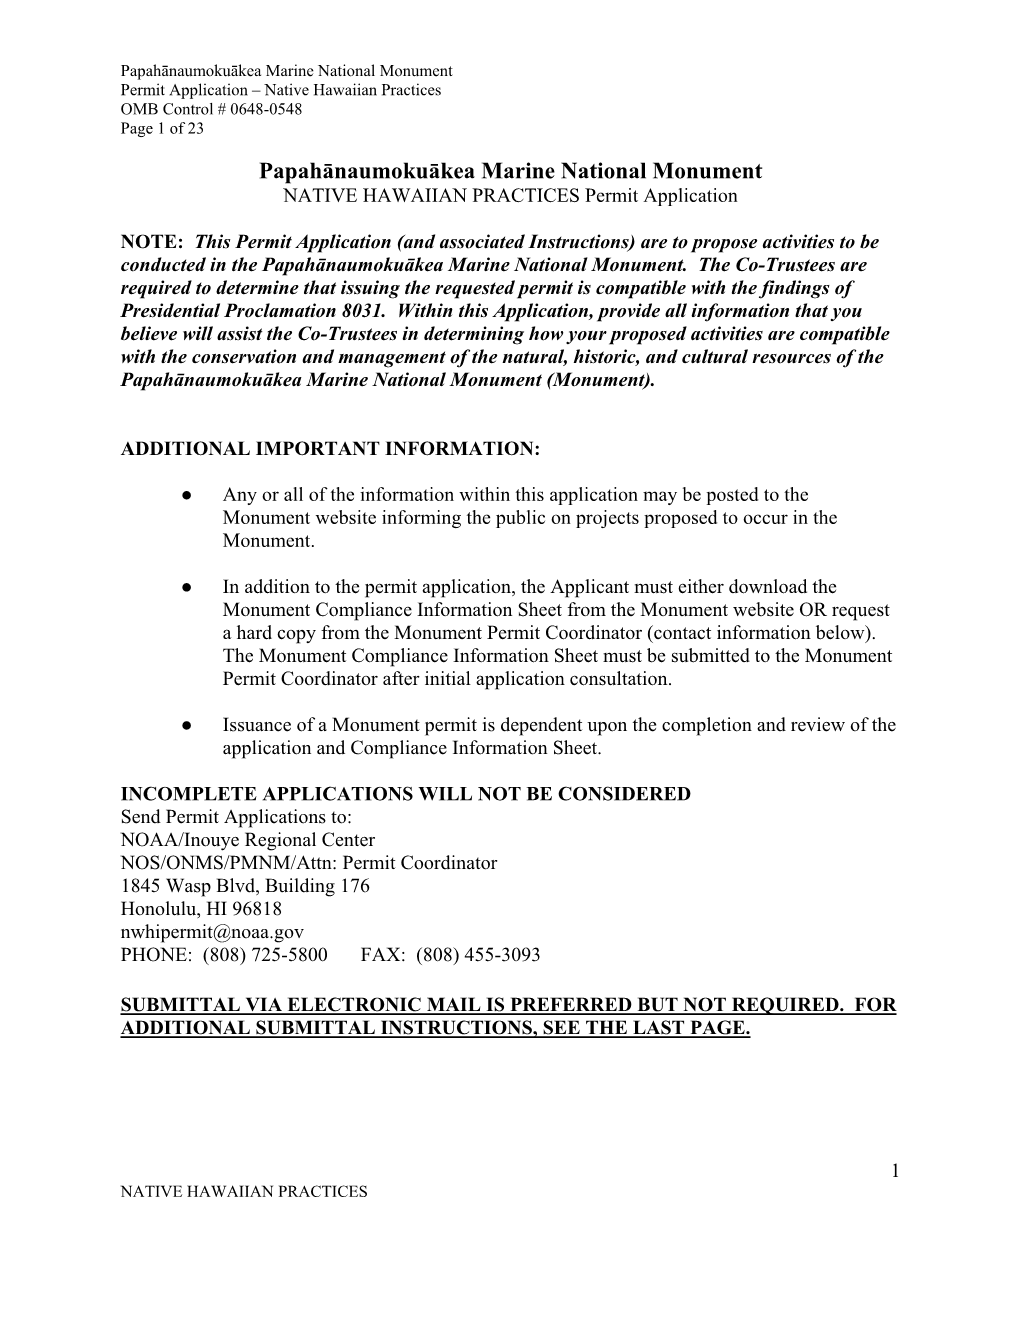 Papahānaumokuākea Marine National Monument Permit Application – Native Hawaiian Practices OMB Control # 0648-0548 Page 1 of 23